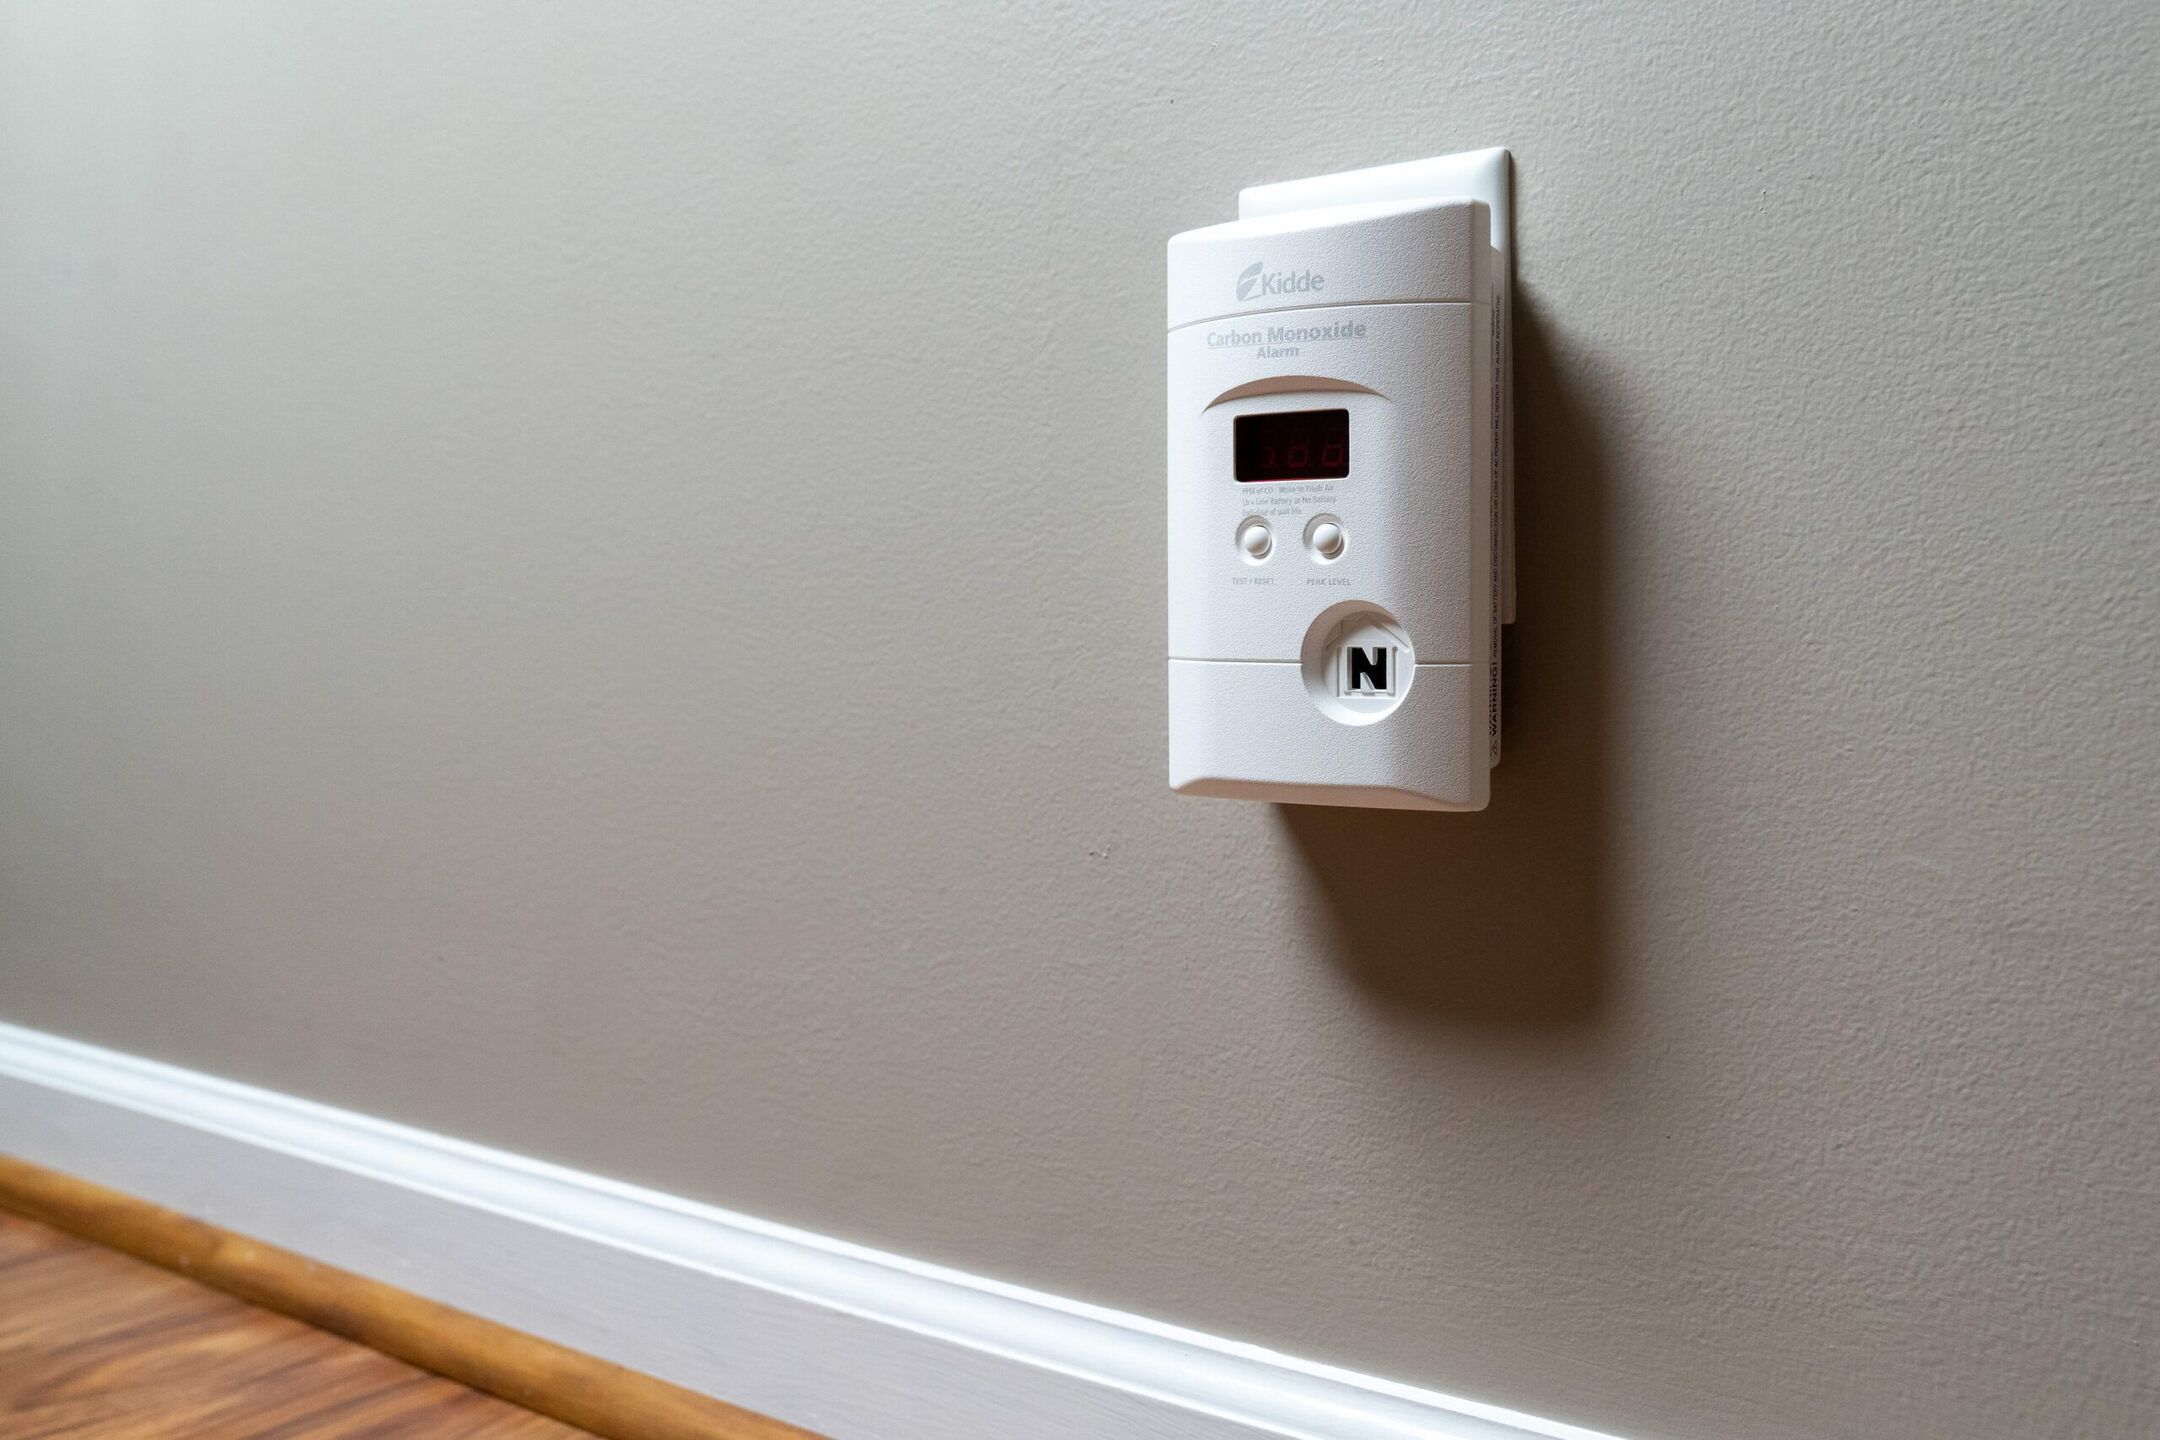 carbon monoxide alarm beeping every 30 seconds